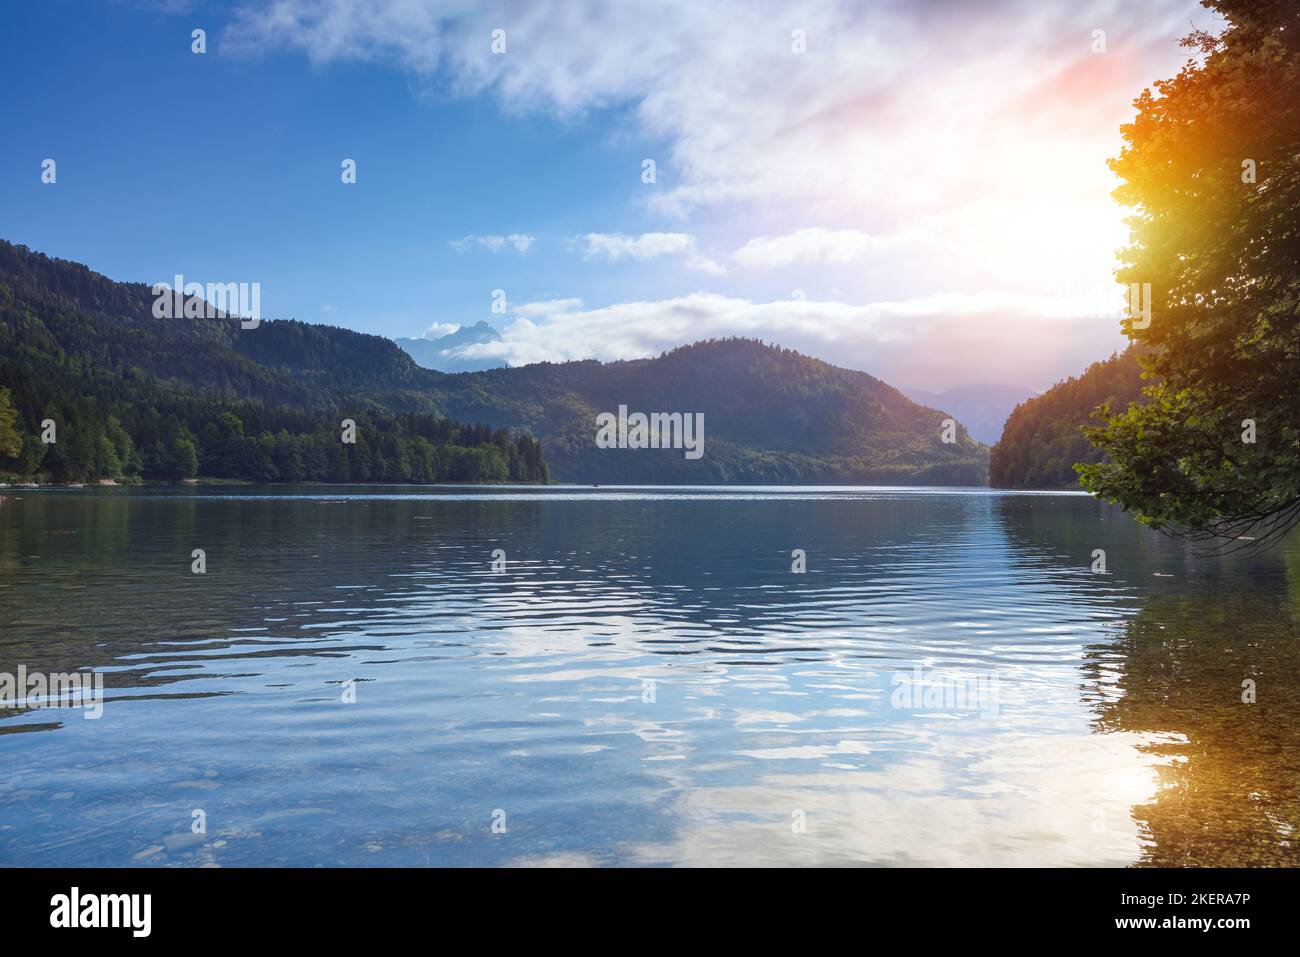 Fantastic sunset of Alpsee lake in the German Alps in Hohenschwangau near castles Hohenschwangau and Neuschwanstein, Allgau, Bavaria, Germany Stock Photo